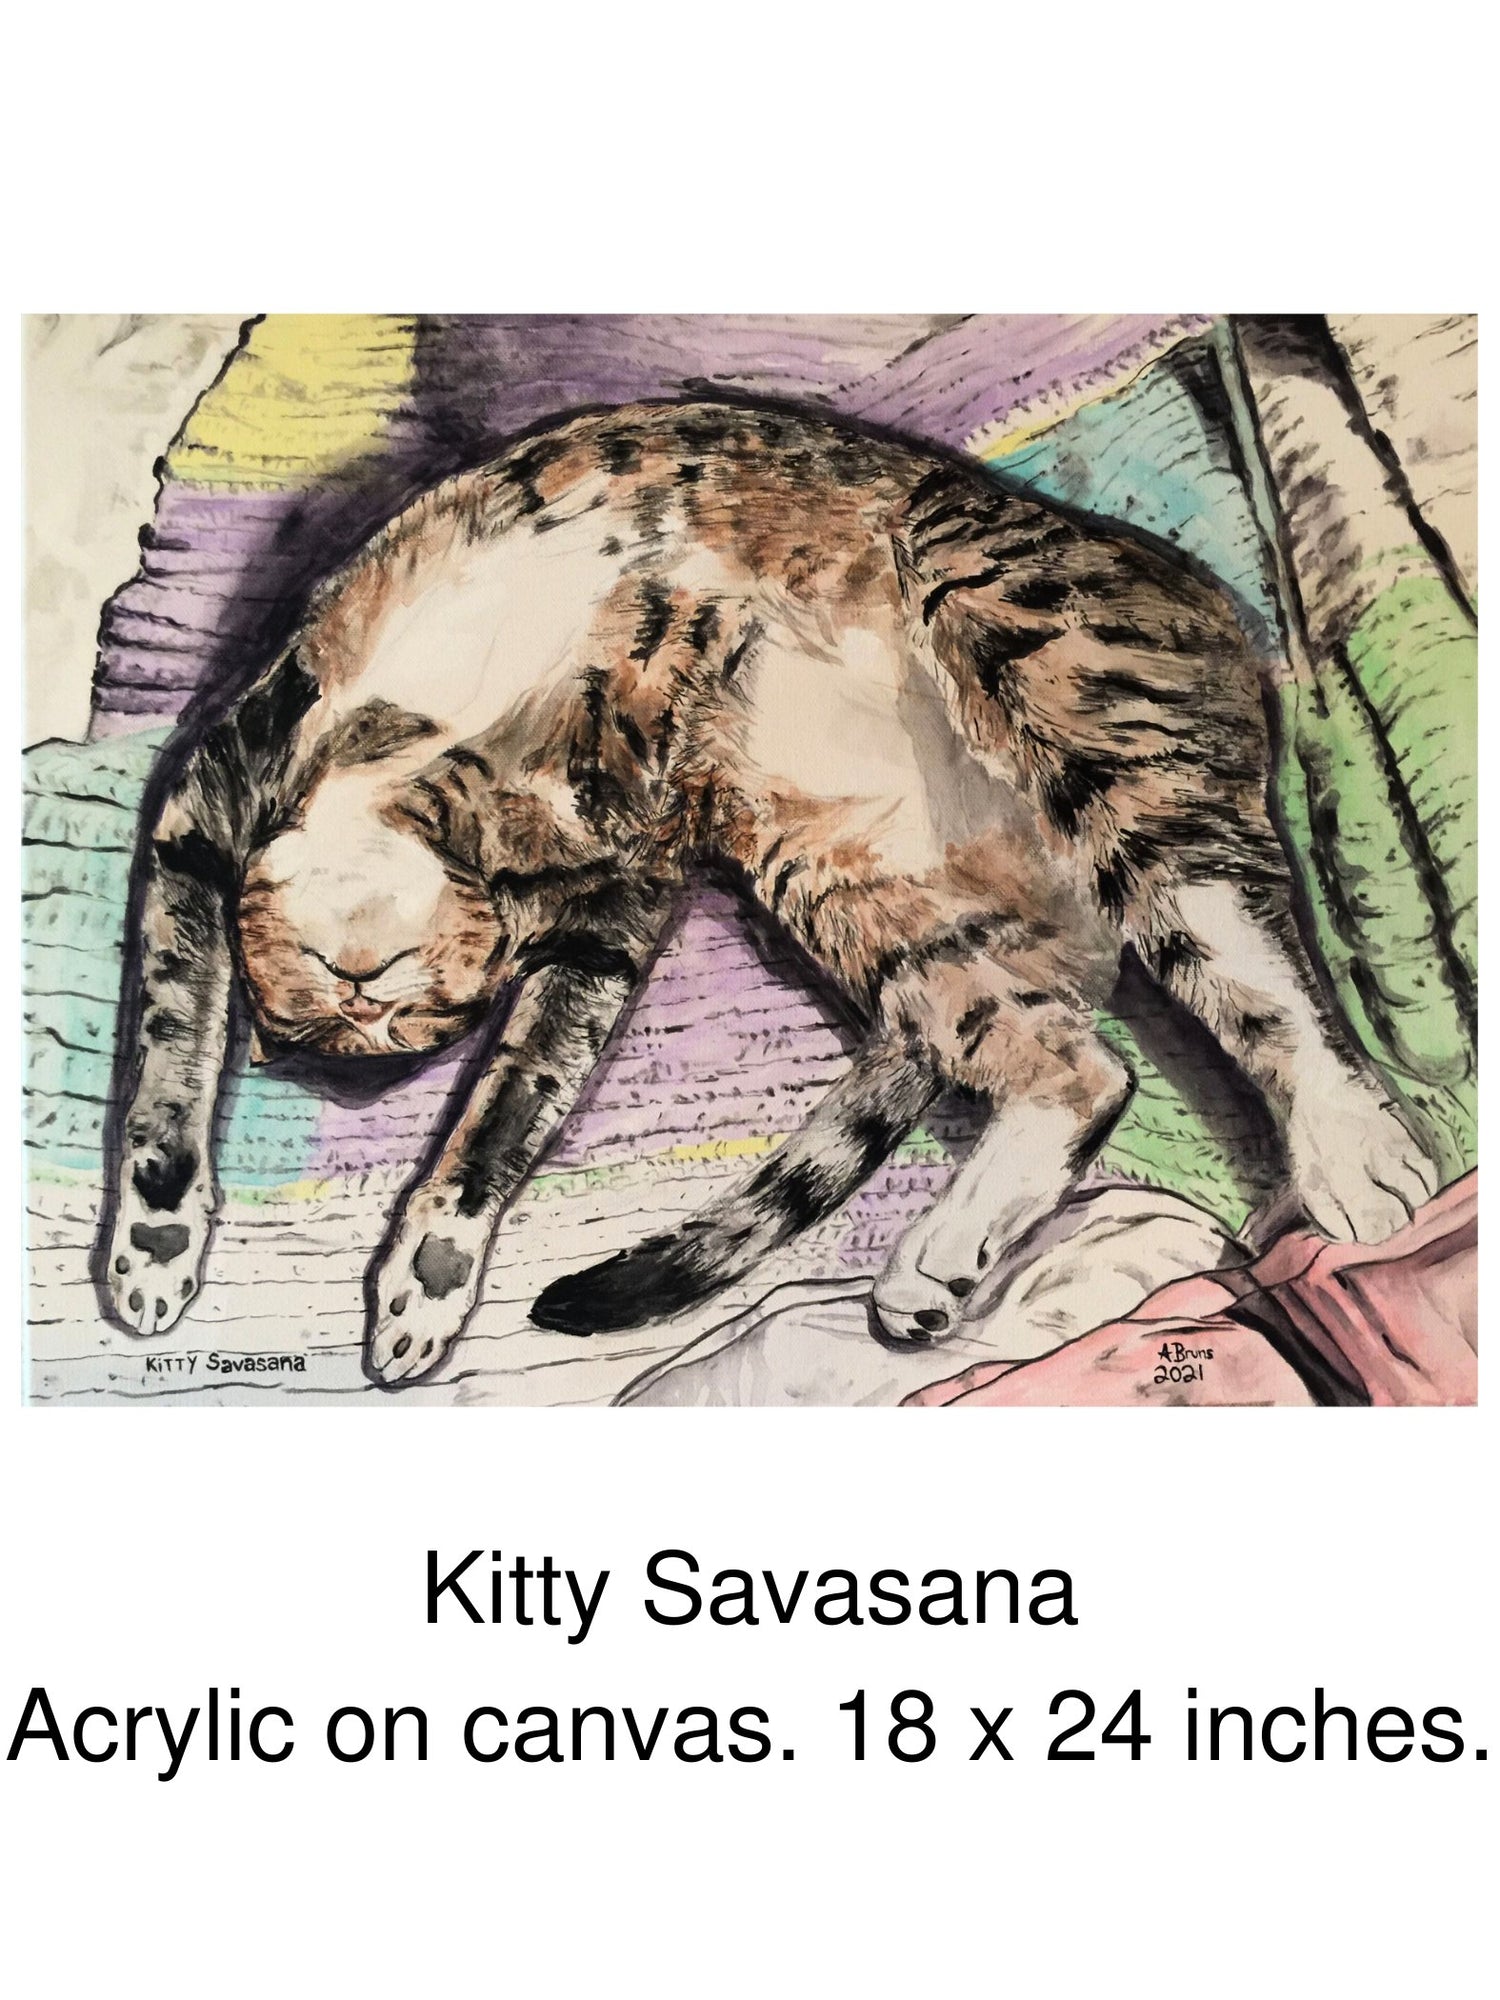 Painting of Kitty Sleeping